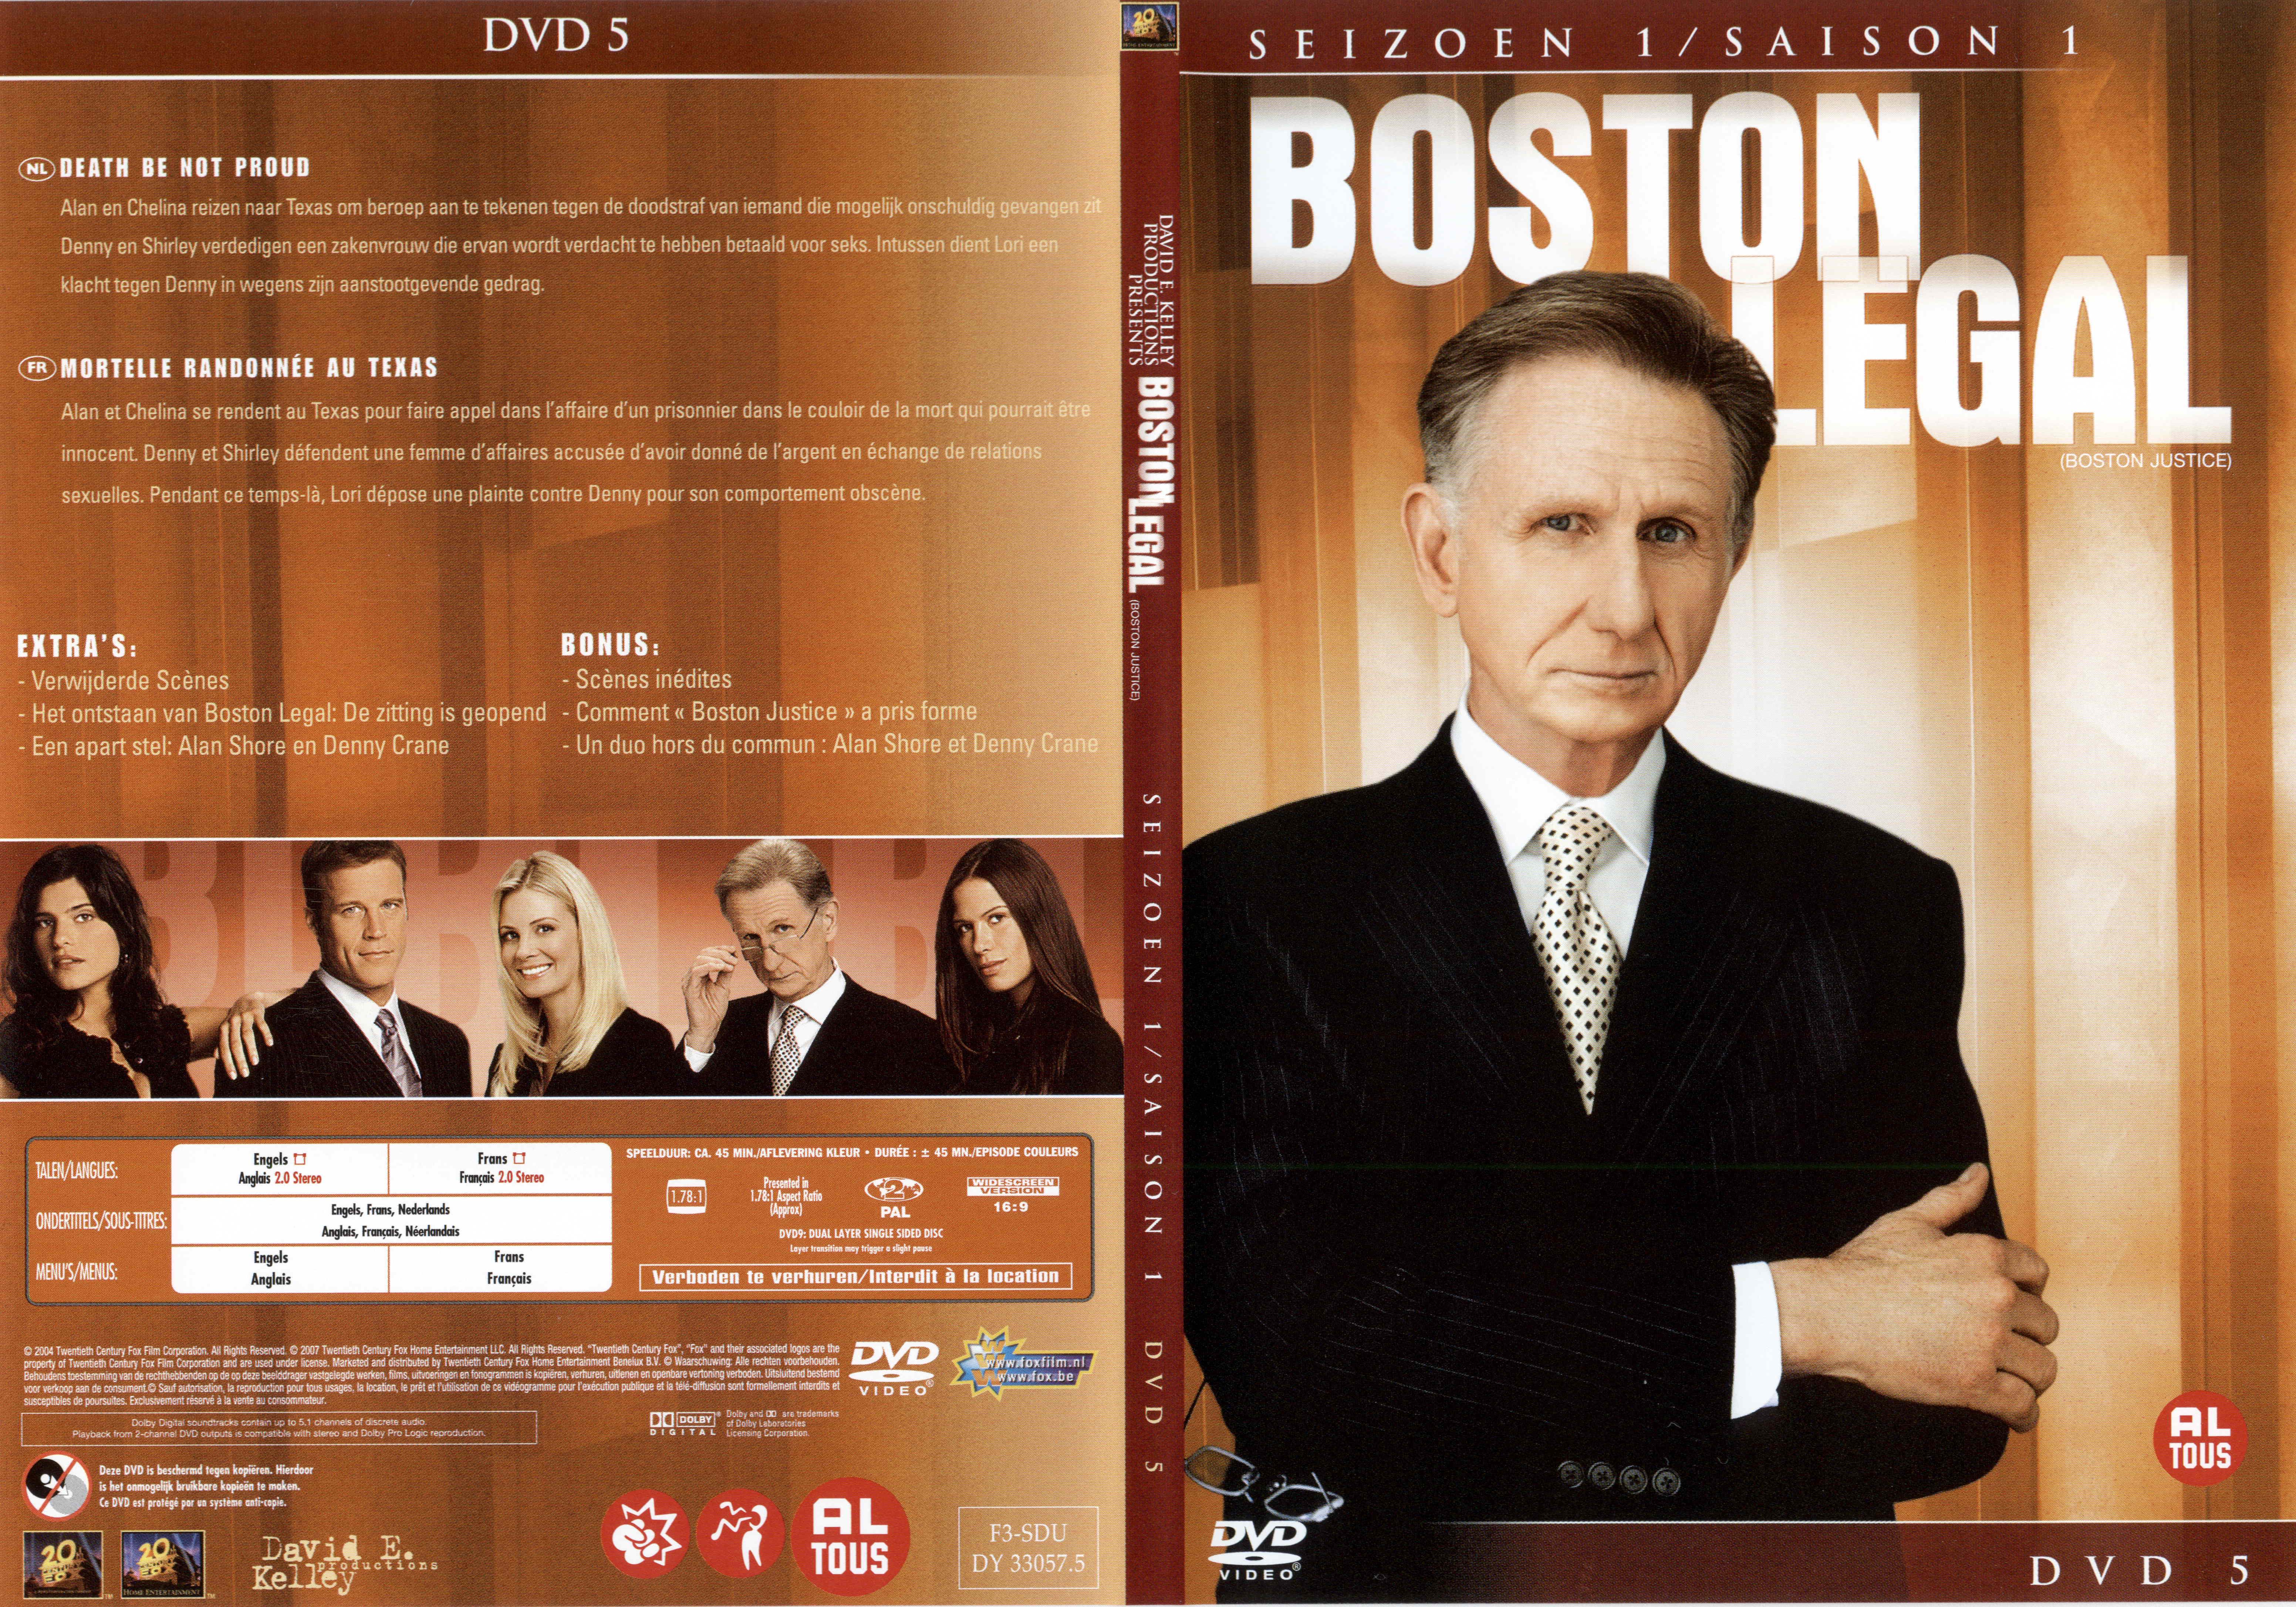 Jaquette DVD Boston legal - Boston justice Saison 1 DVD 5